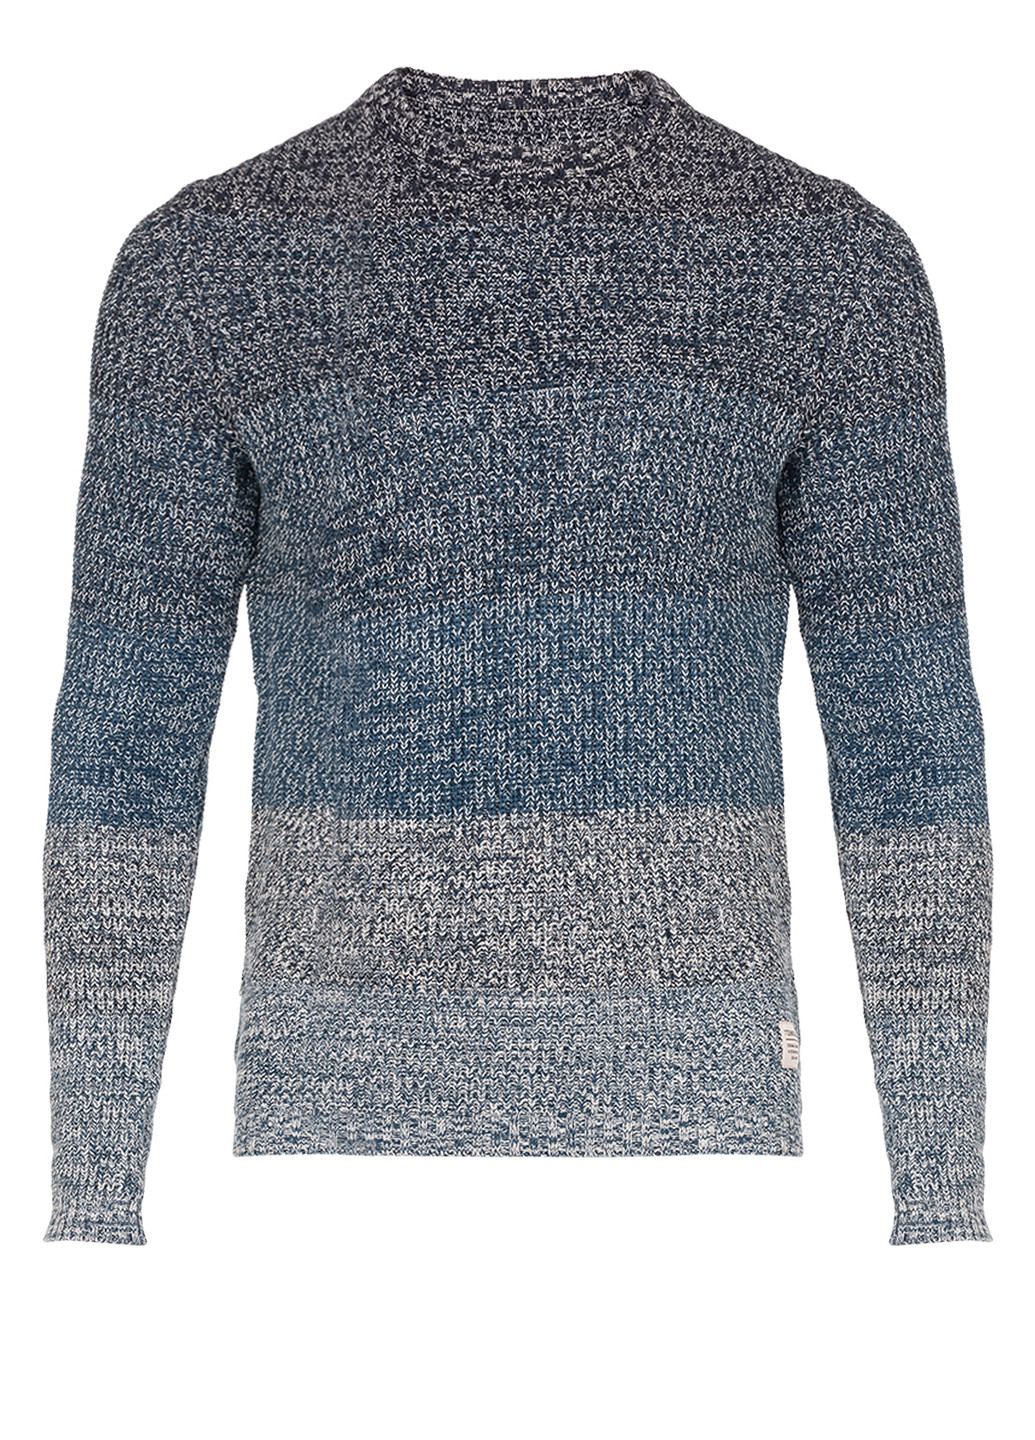 Синий зимний мужской вязаный свитер джемпер Tom Tailor